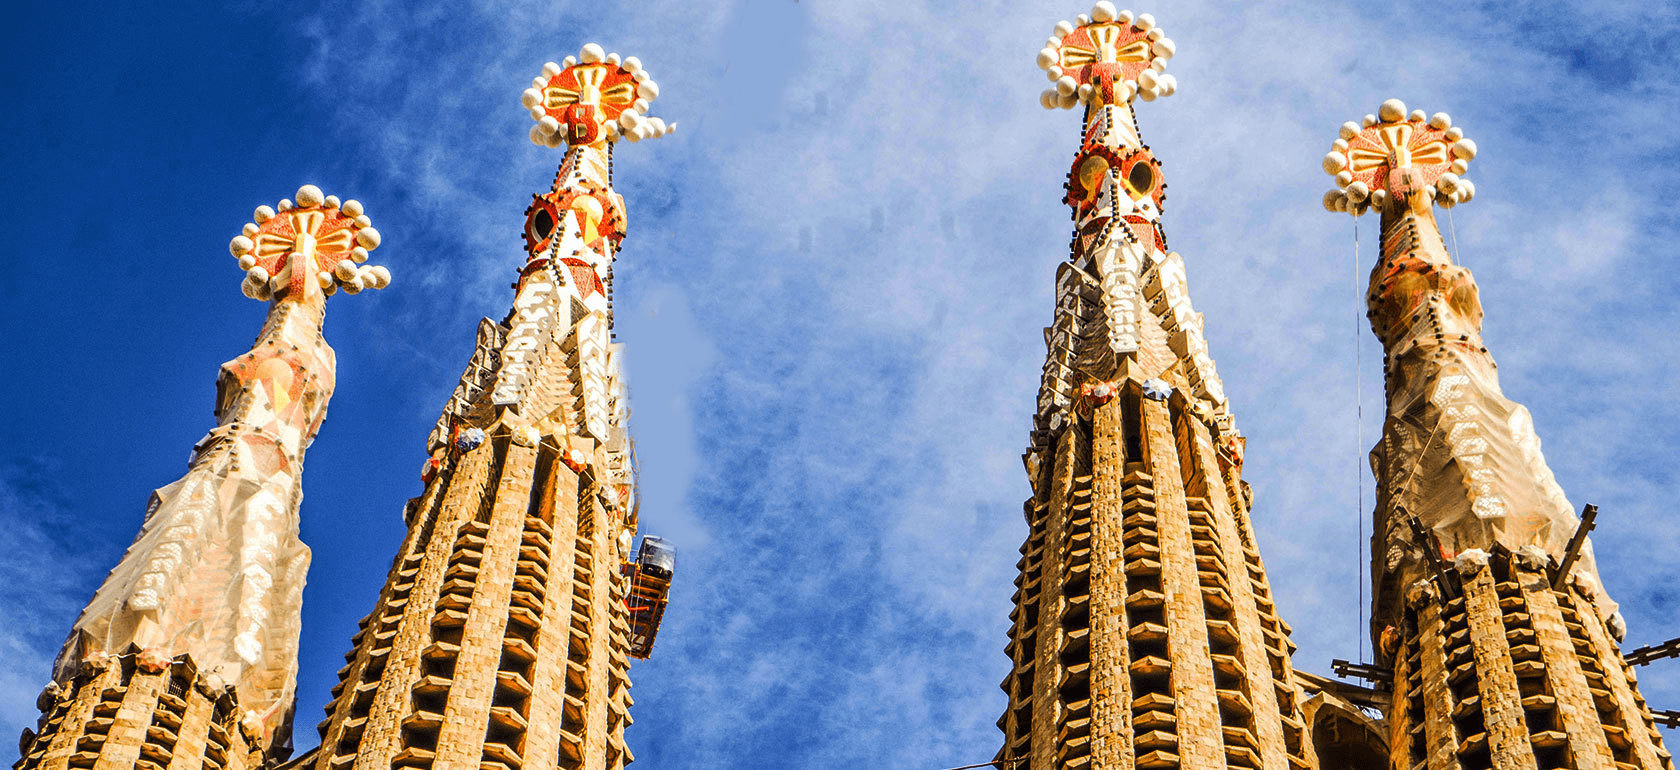 Sagrada Familia by Gaudi - Basilica in Barcelona, Spain - 137 Year Project 95